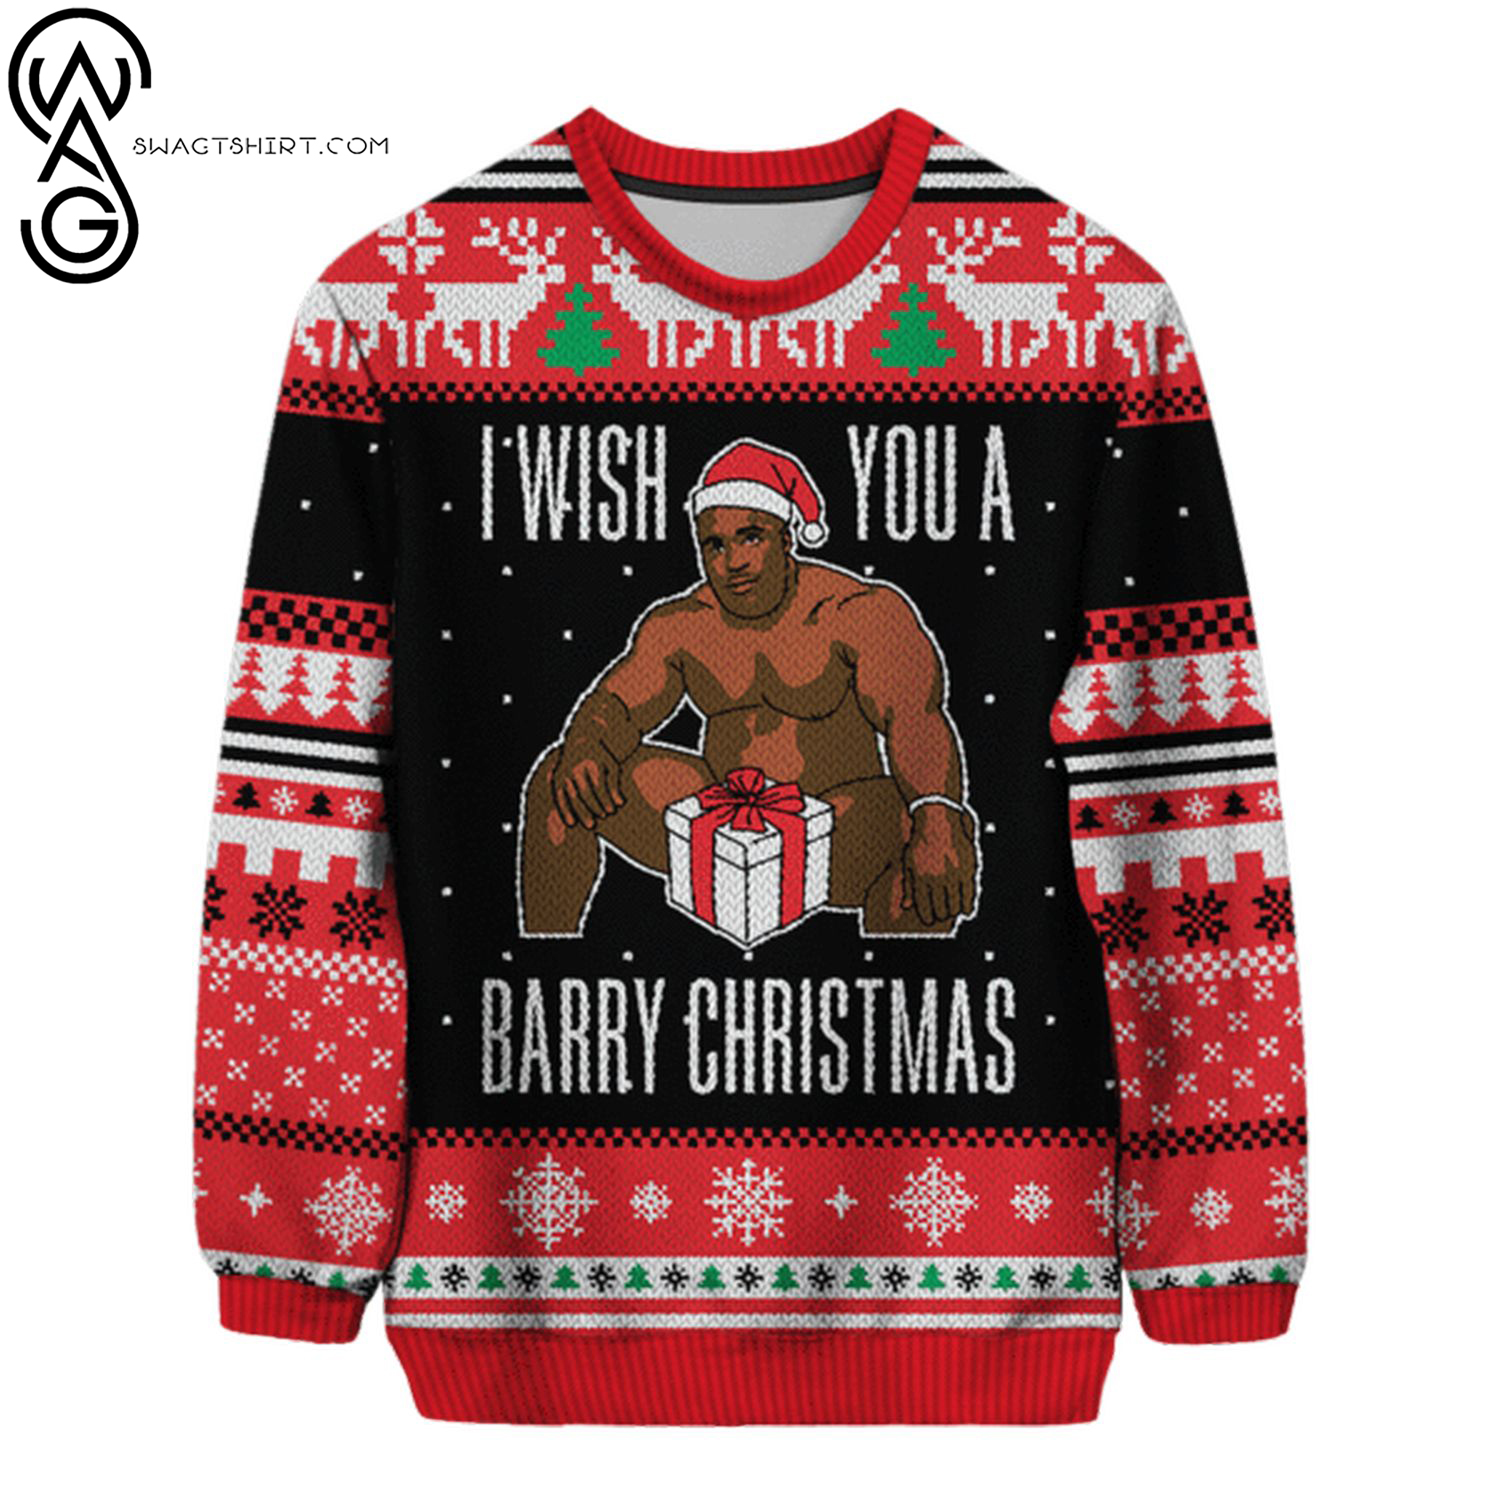 Barry woods i wish you a barry christmas ugly christmas sweater